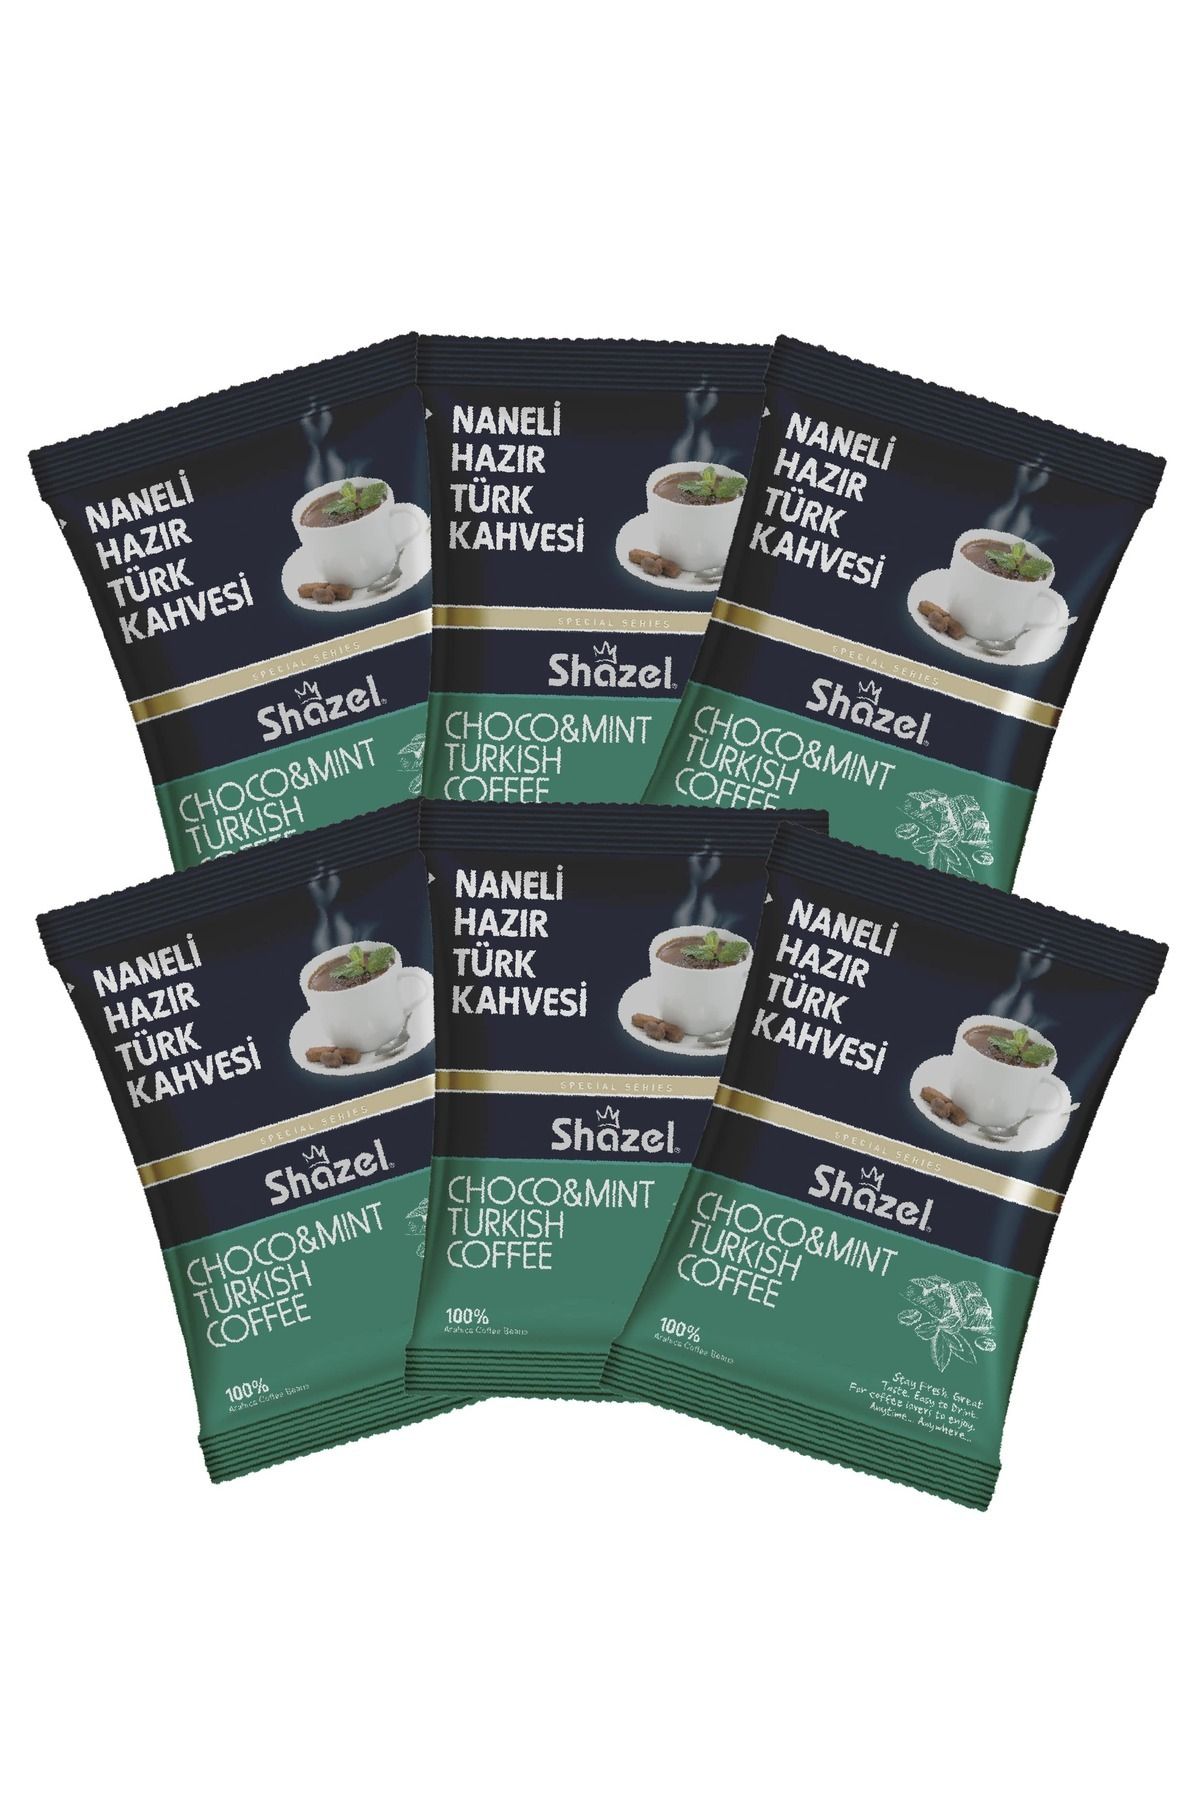 Shazel Naneli Hazır Türk Kahvesi 100g X 6 Adet (AROMALI)